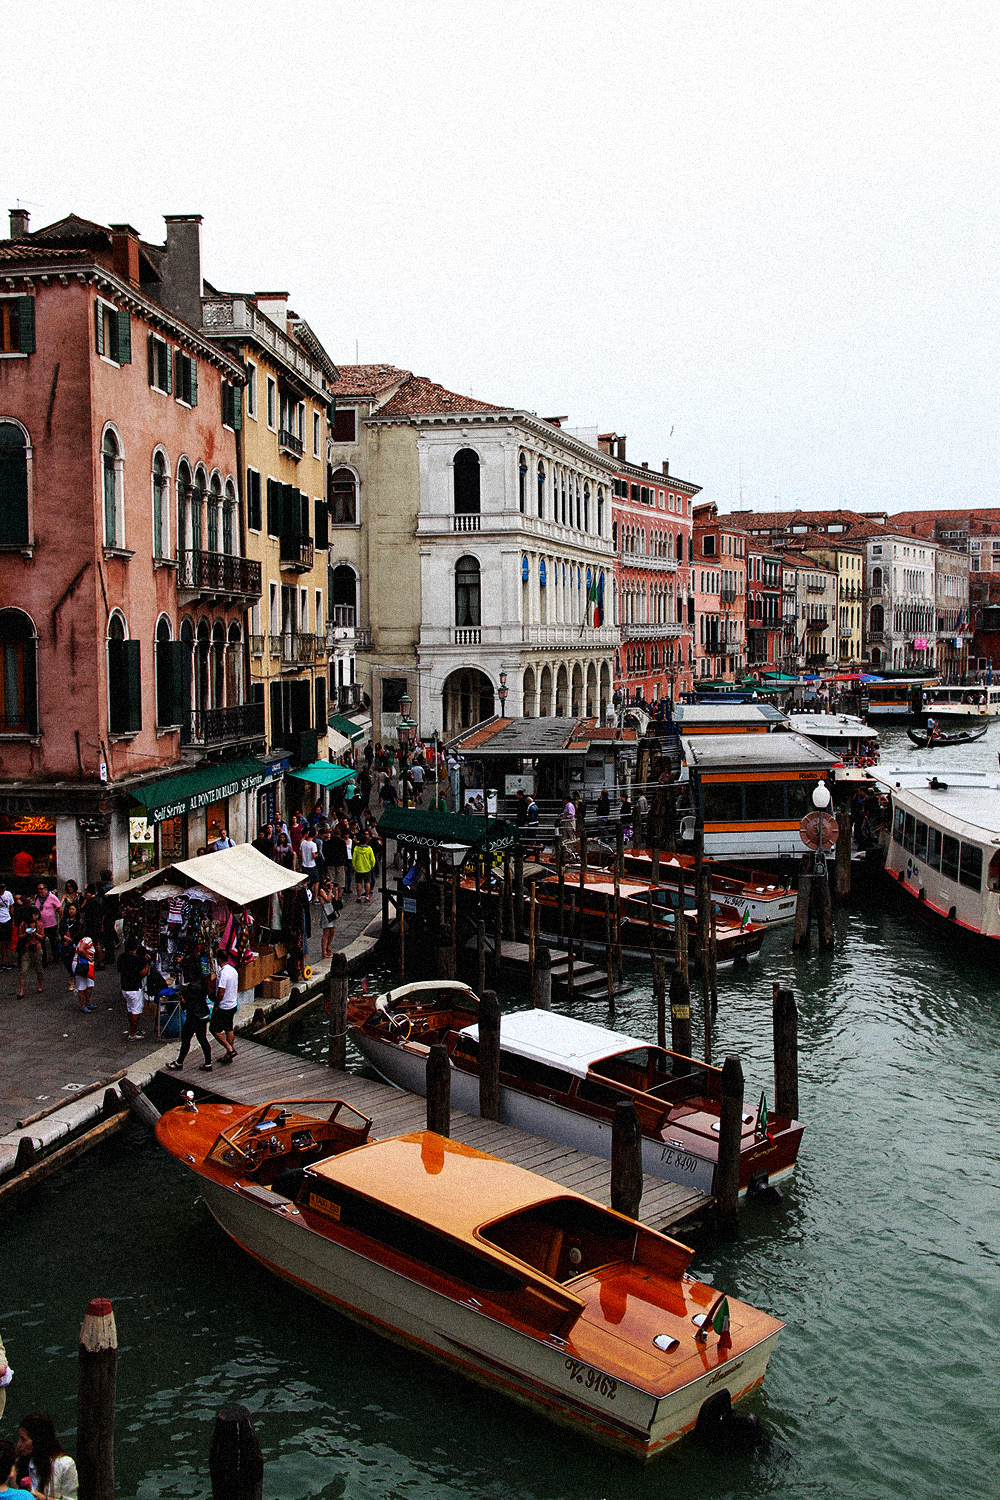 IHEARTALICE.DE – Fashion & Travel Blog: Venice/Italy Travel & Food Diary / Globetrotter Blog